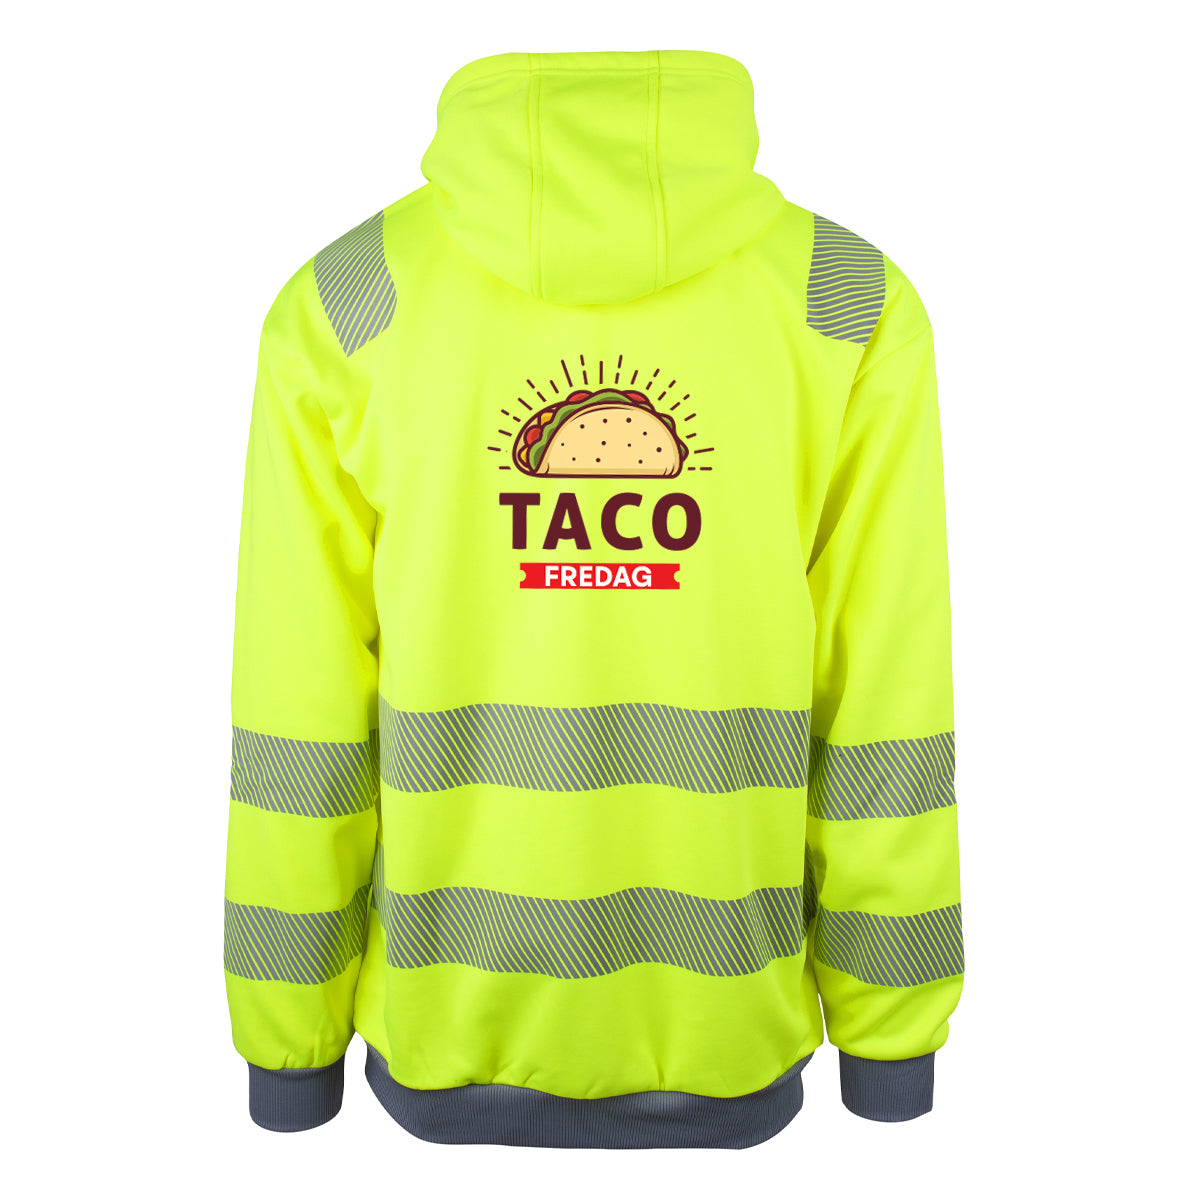 Taco-Fredag - refleksgensar